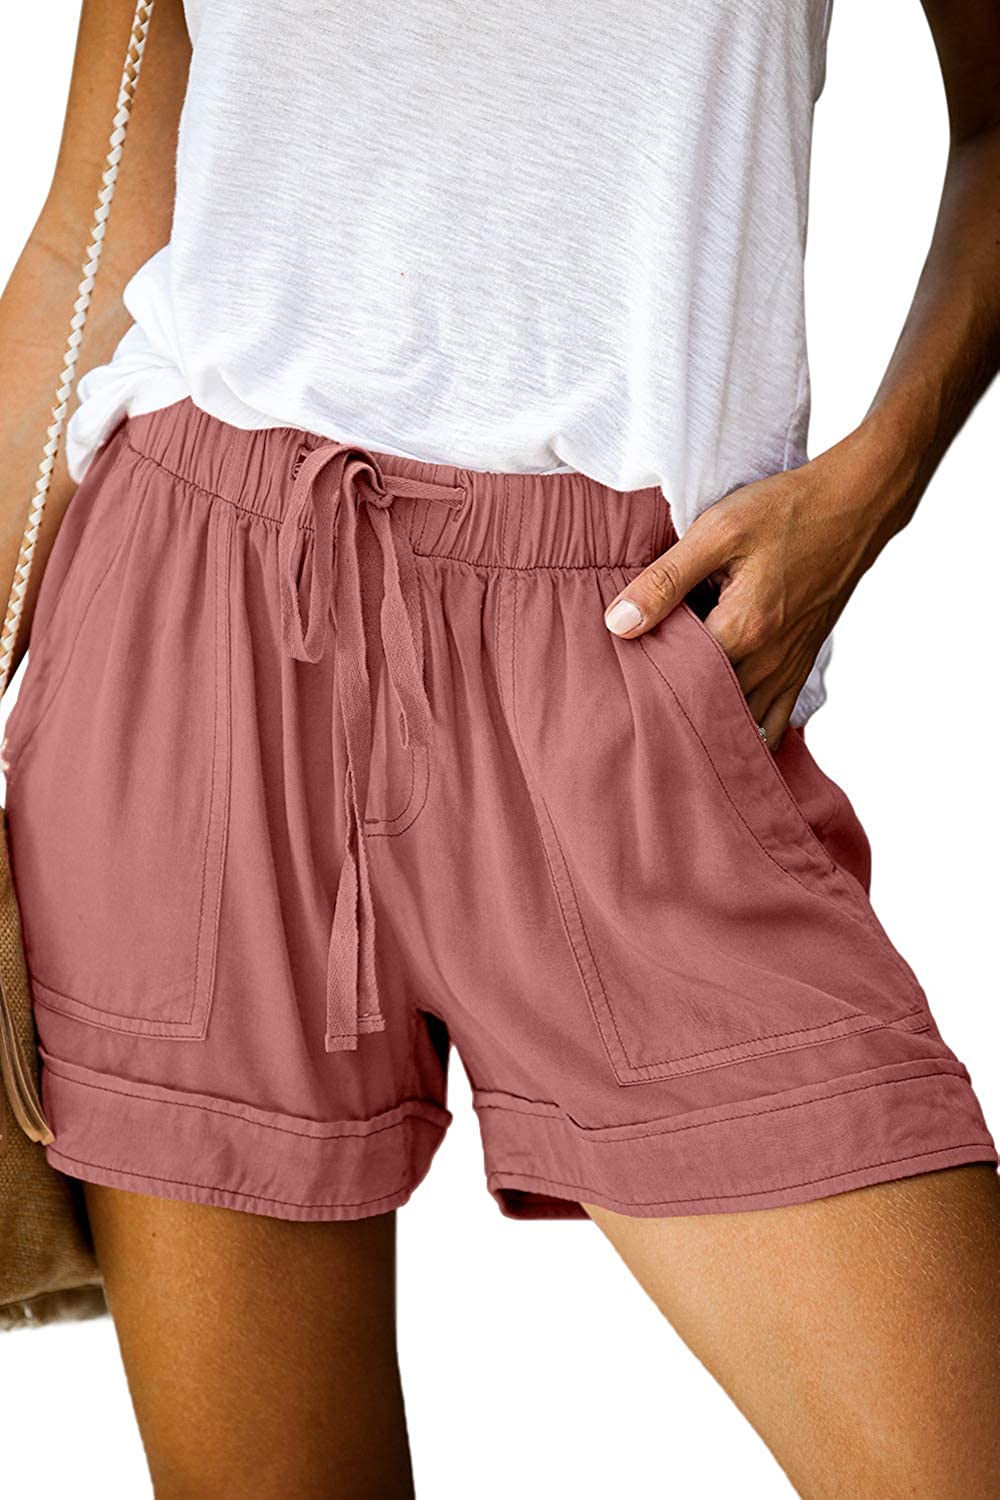 CILKOO Womens Comfy Drawstring Casual Elastic Waist Pocketed Shorts S-XXL